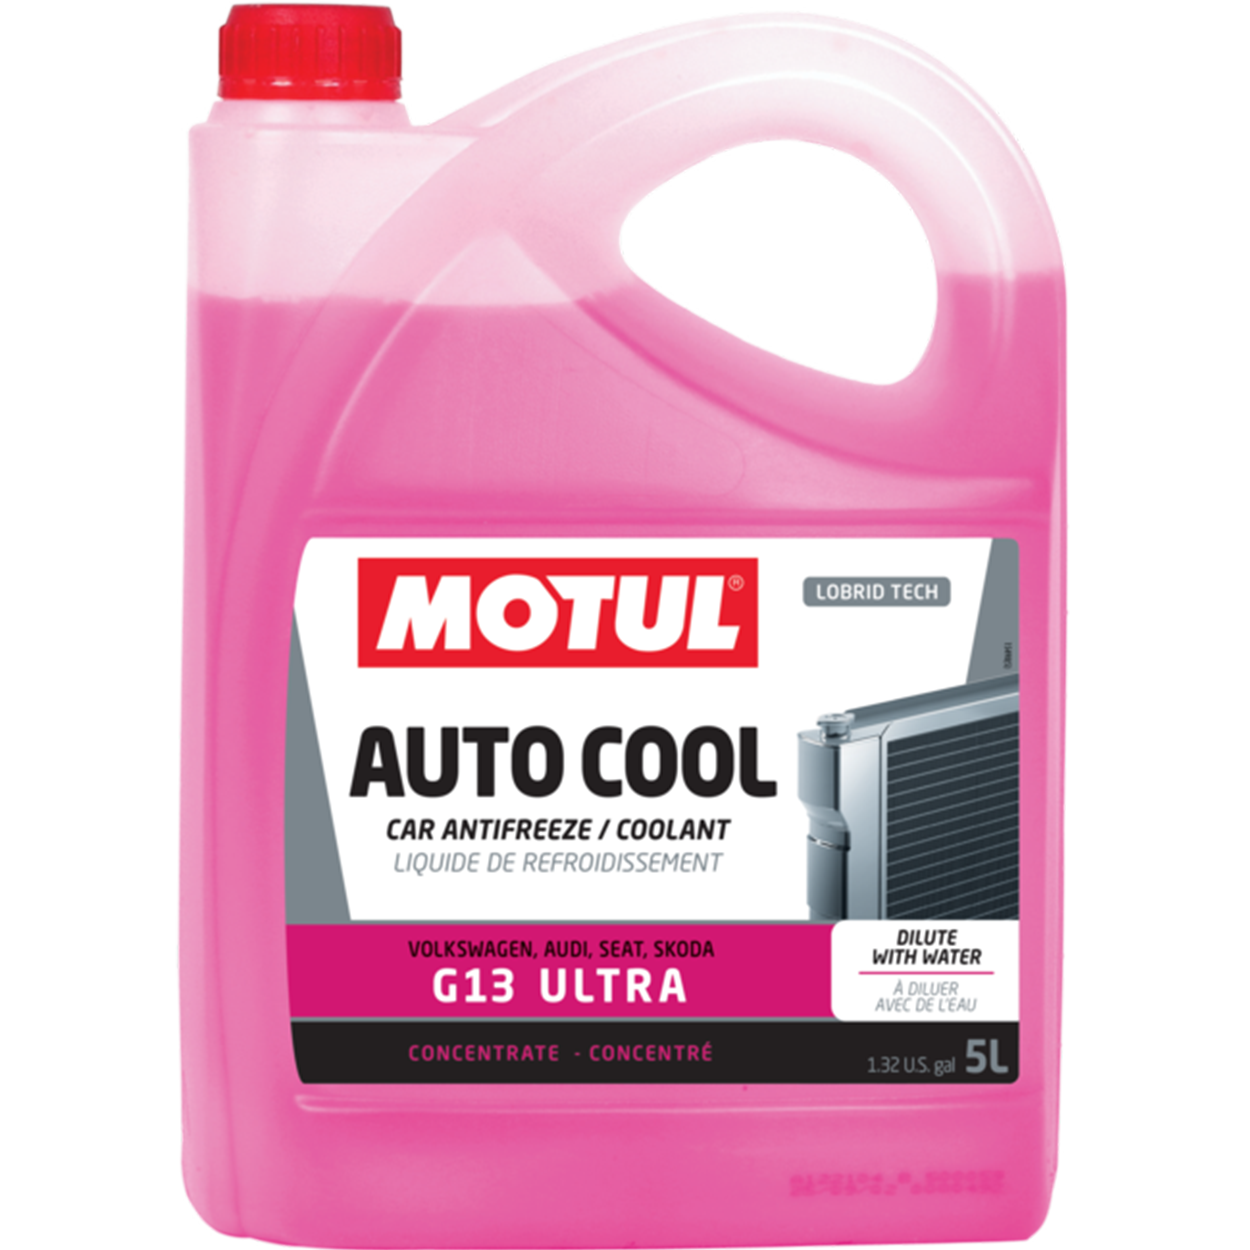 Motul Auto Cool G13 Ultra